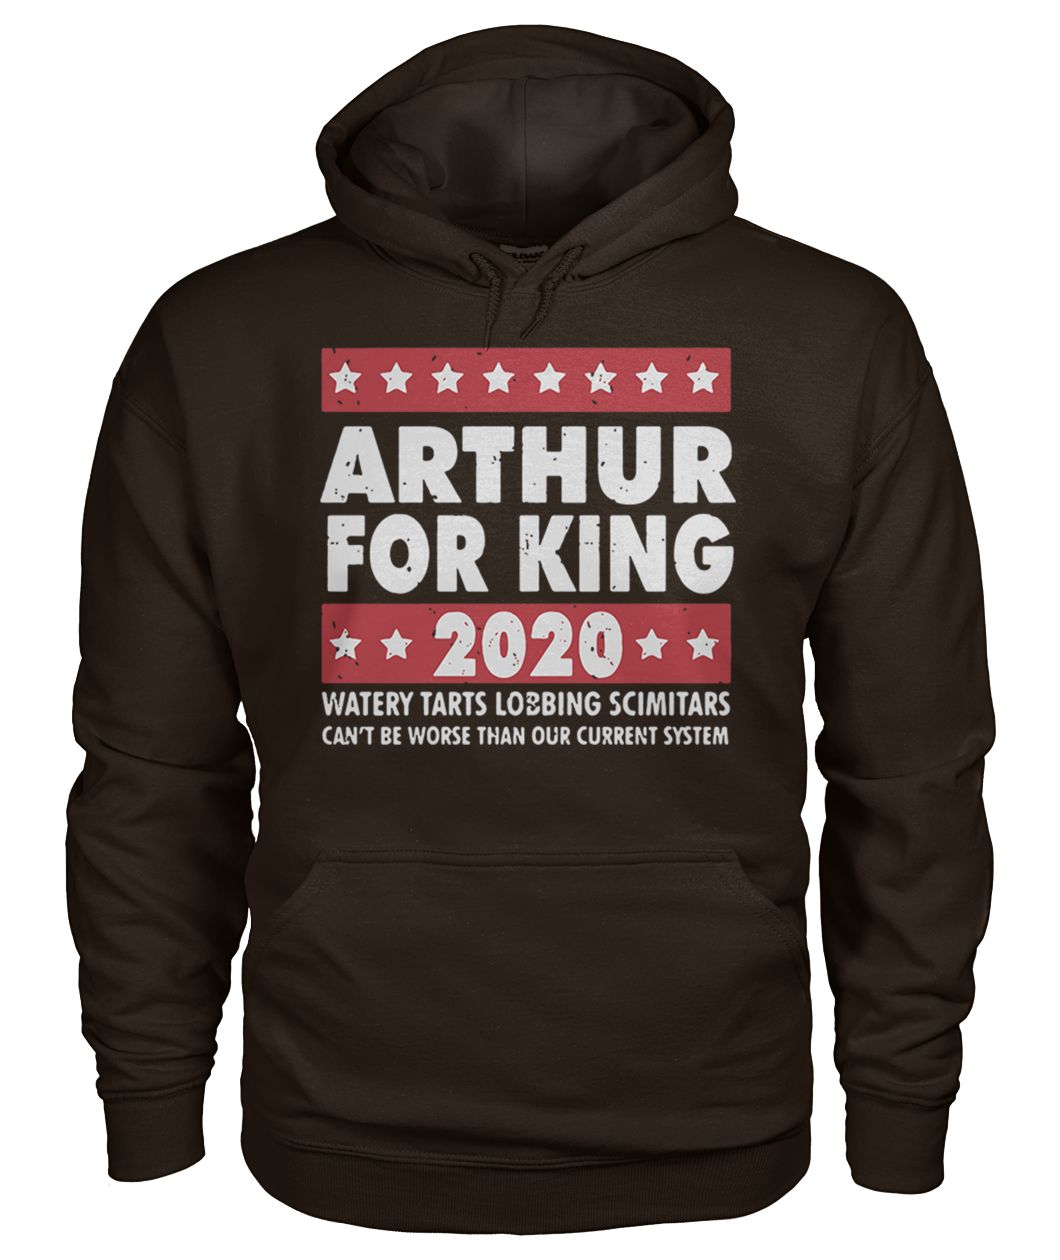 Arthur for king 2020 watery tarts lobbing scimitars gildan hoodie